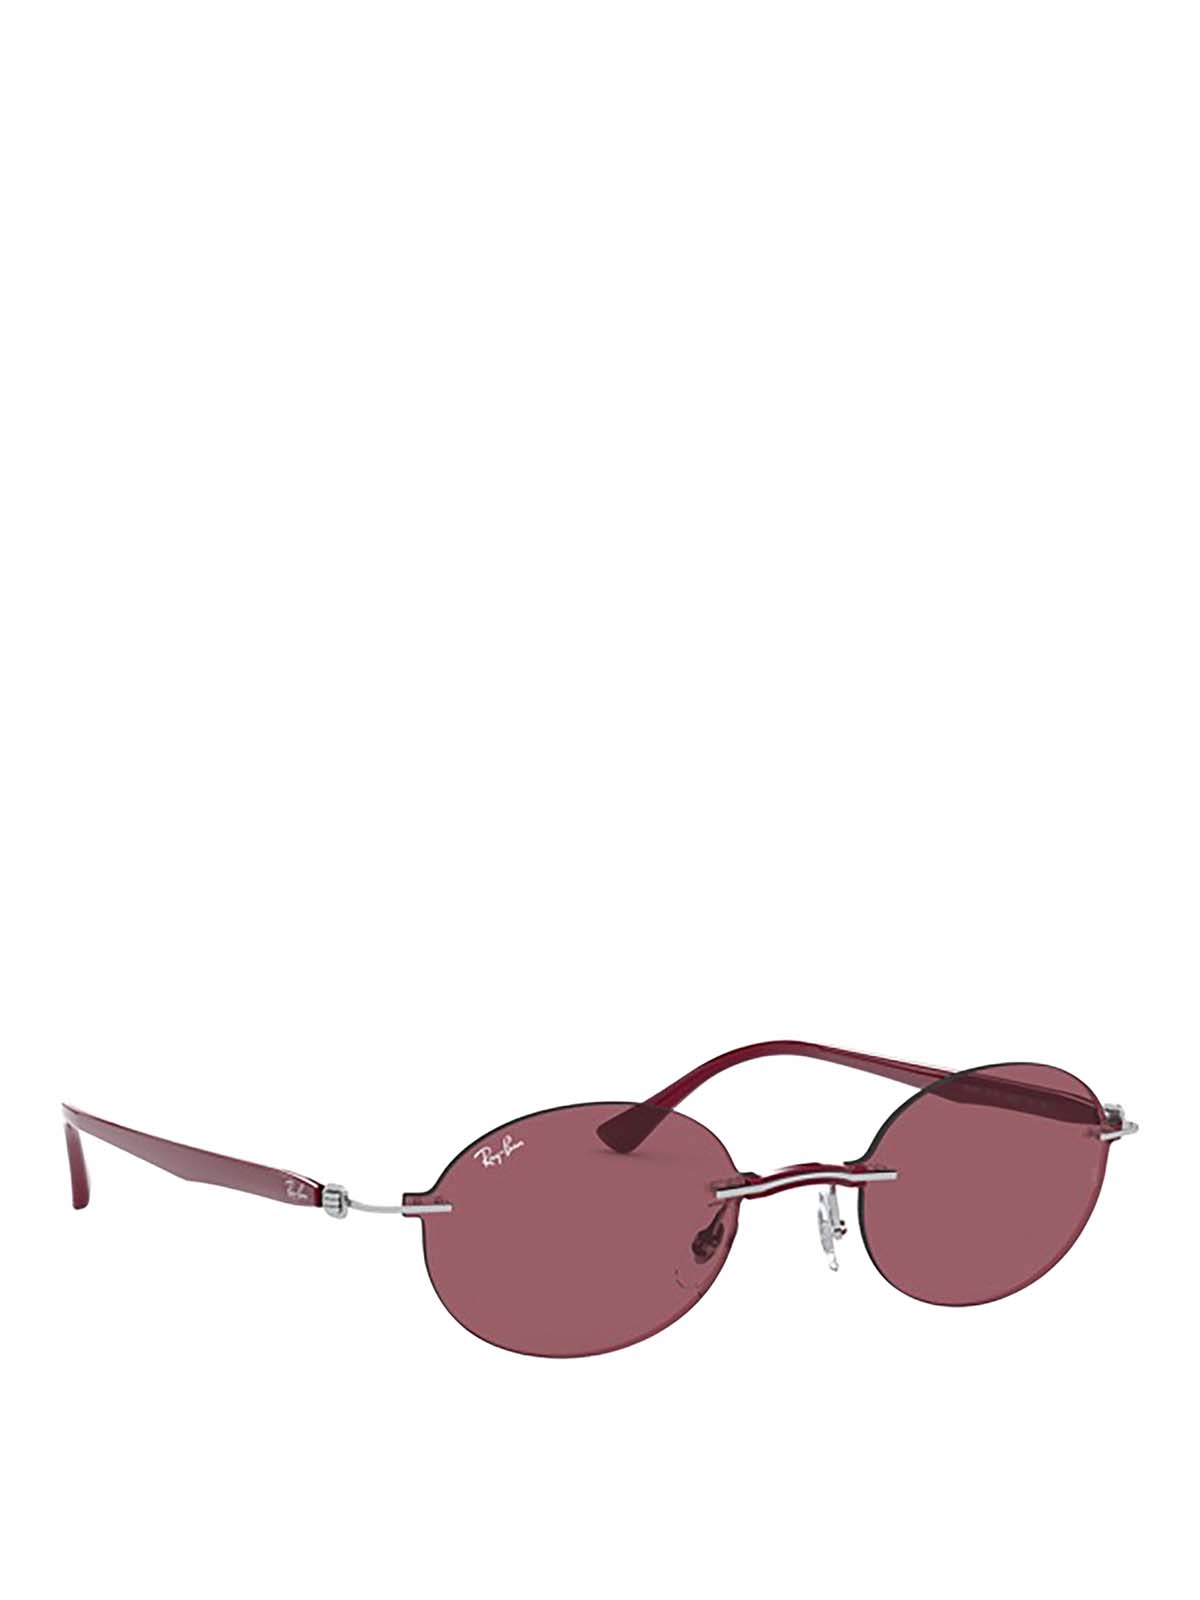 Sunglasses Ray Ban - RB8060 violet lenses sunglasses - RB806000375